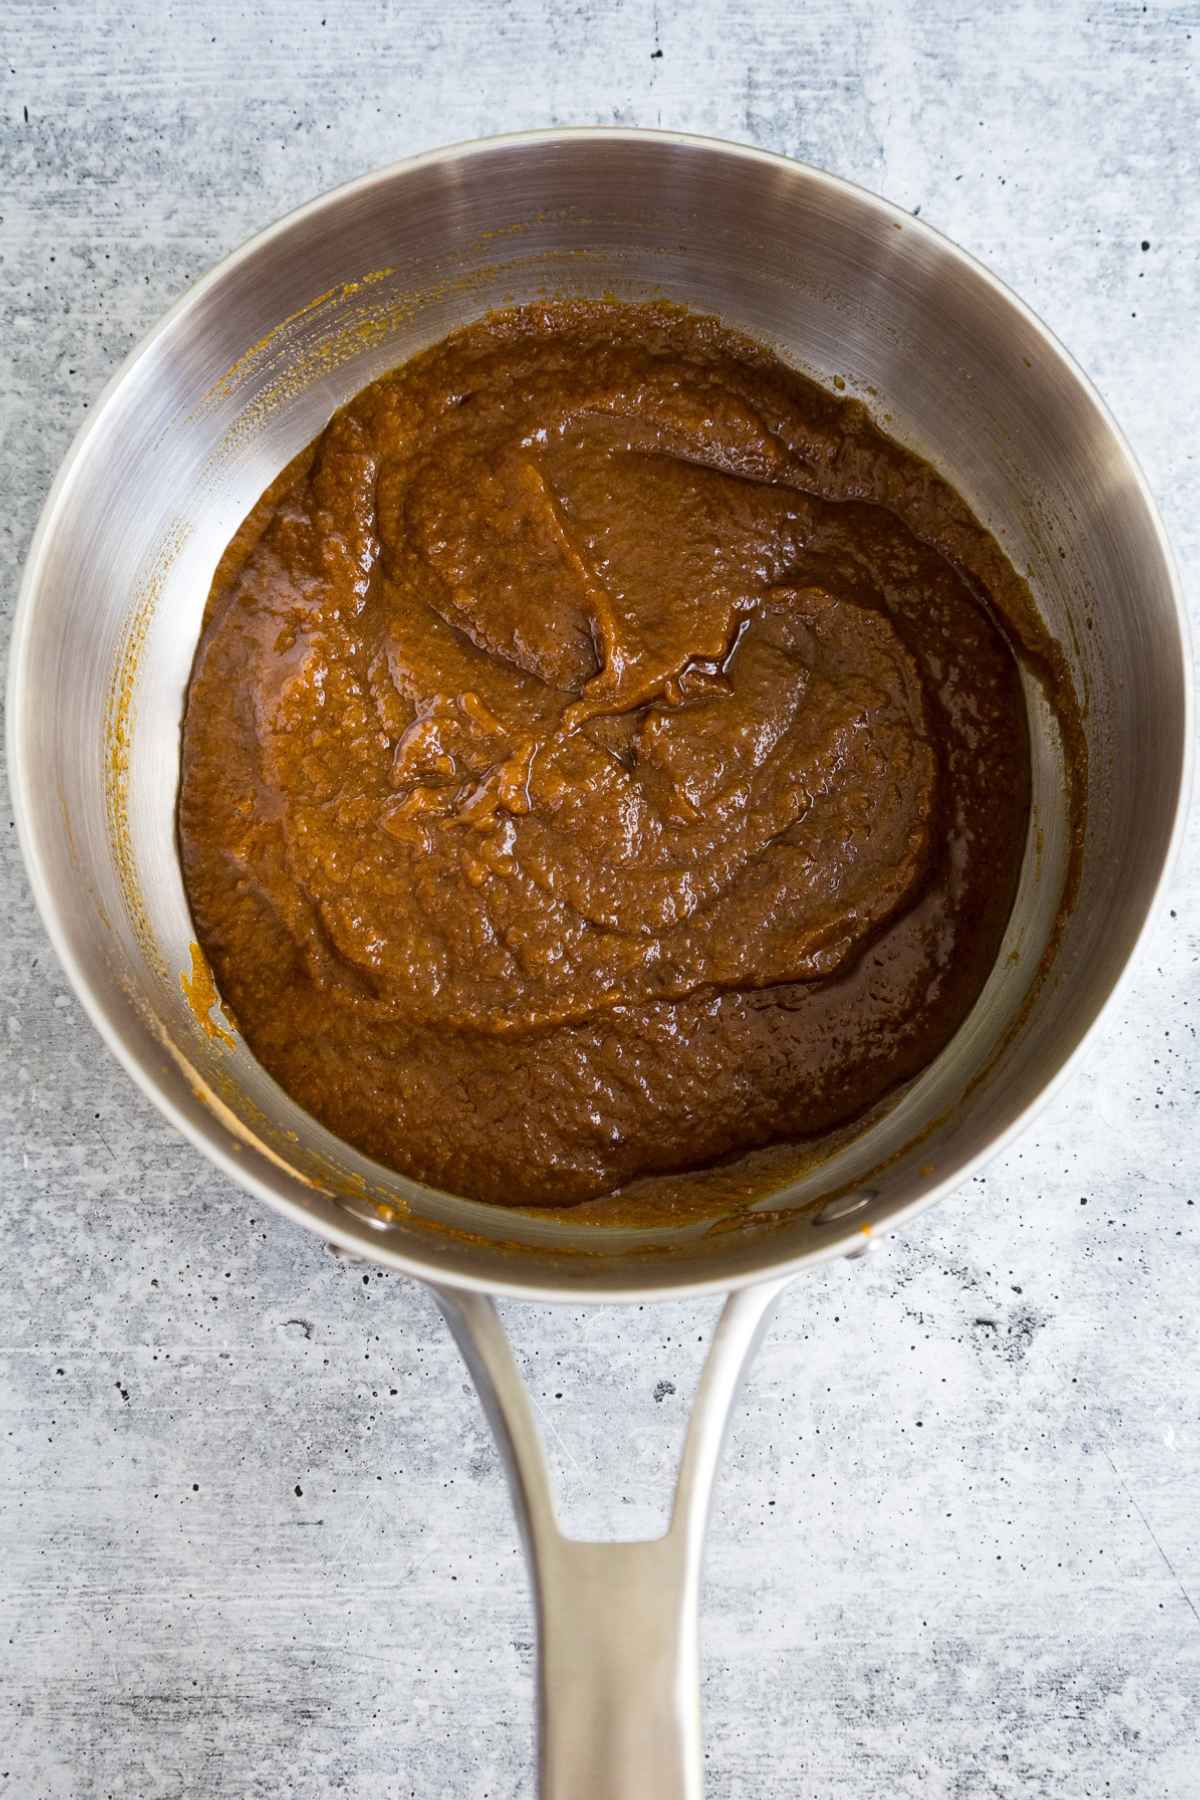 Cooked pumpkin mixture in a saucepan.